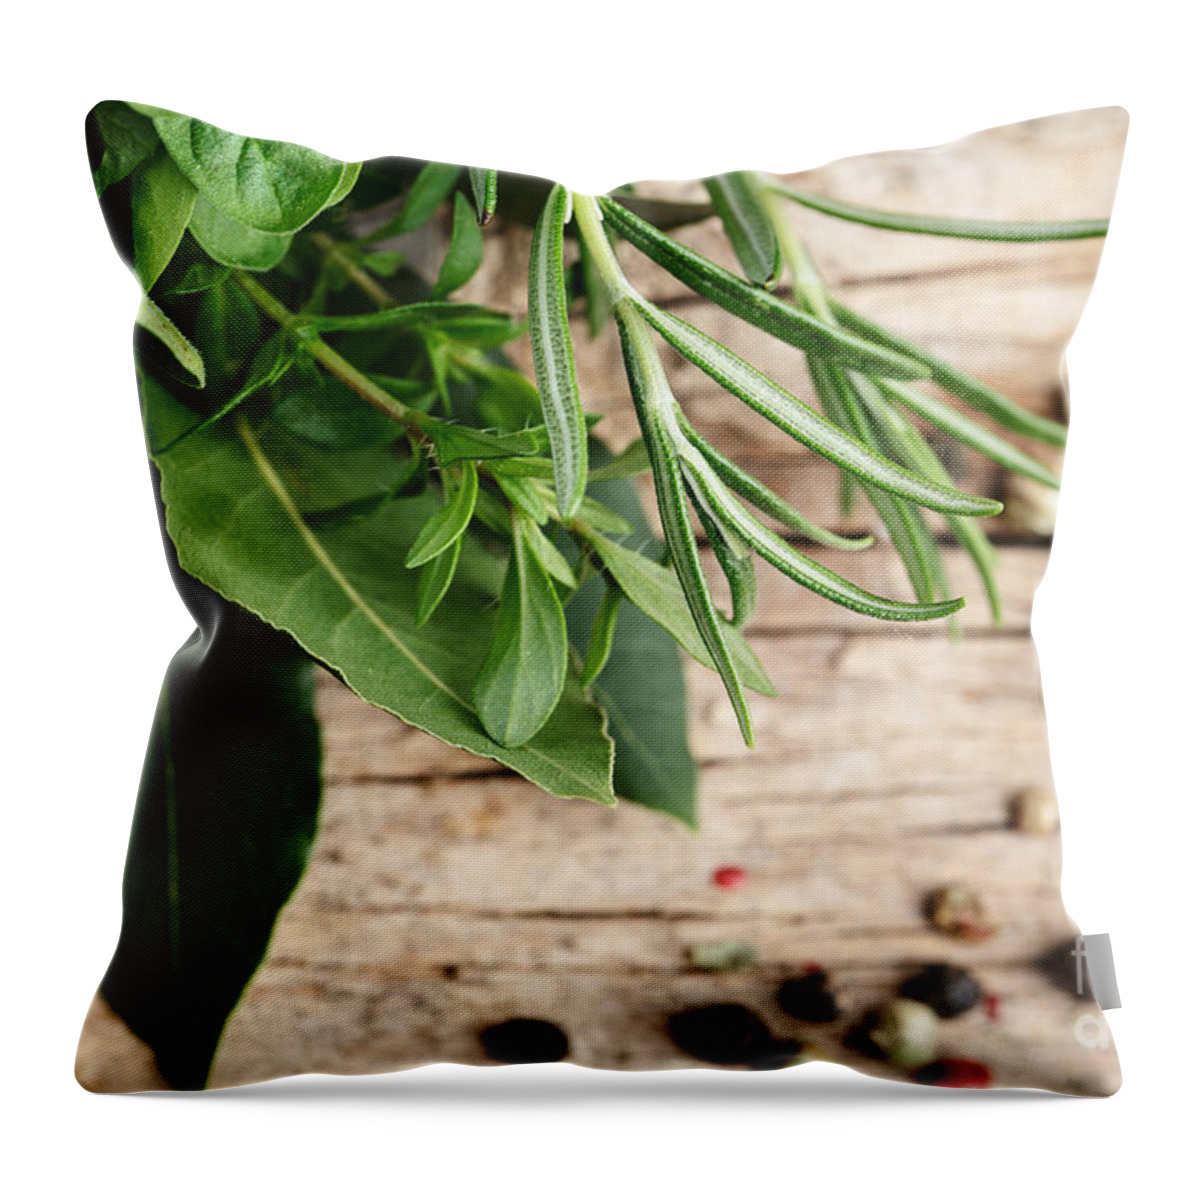 Lorel Throw Pillow featuring the photograph Kitchen Herbs by Nailia Schwarz